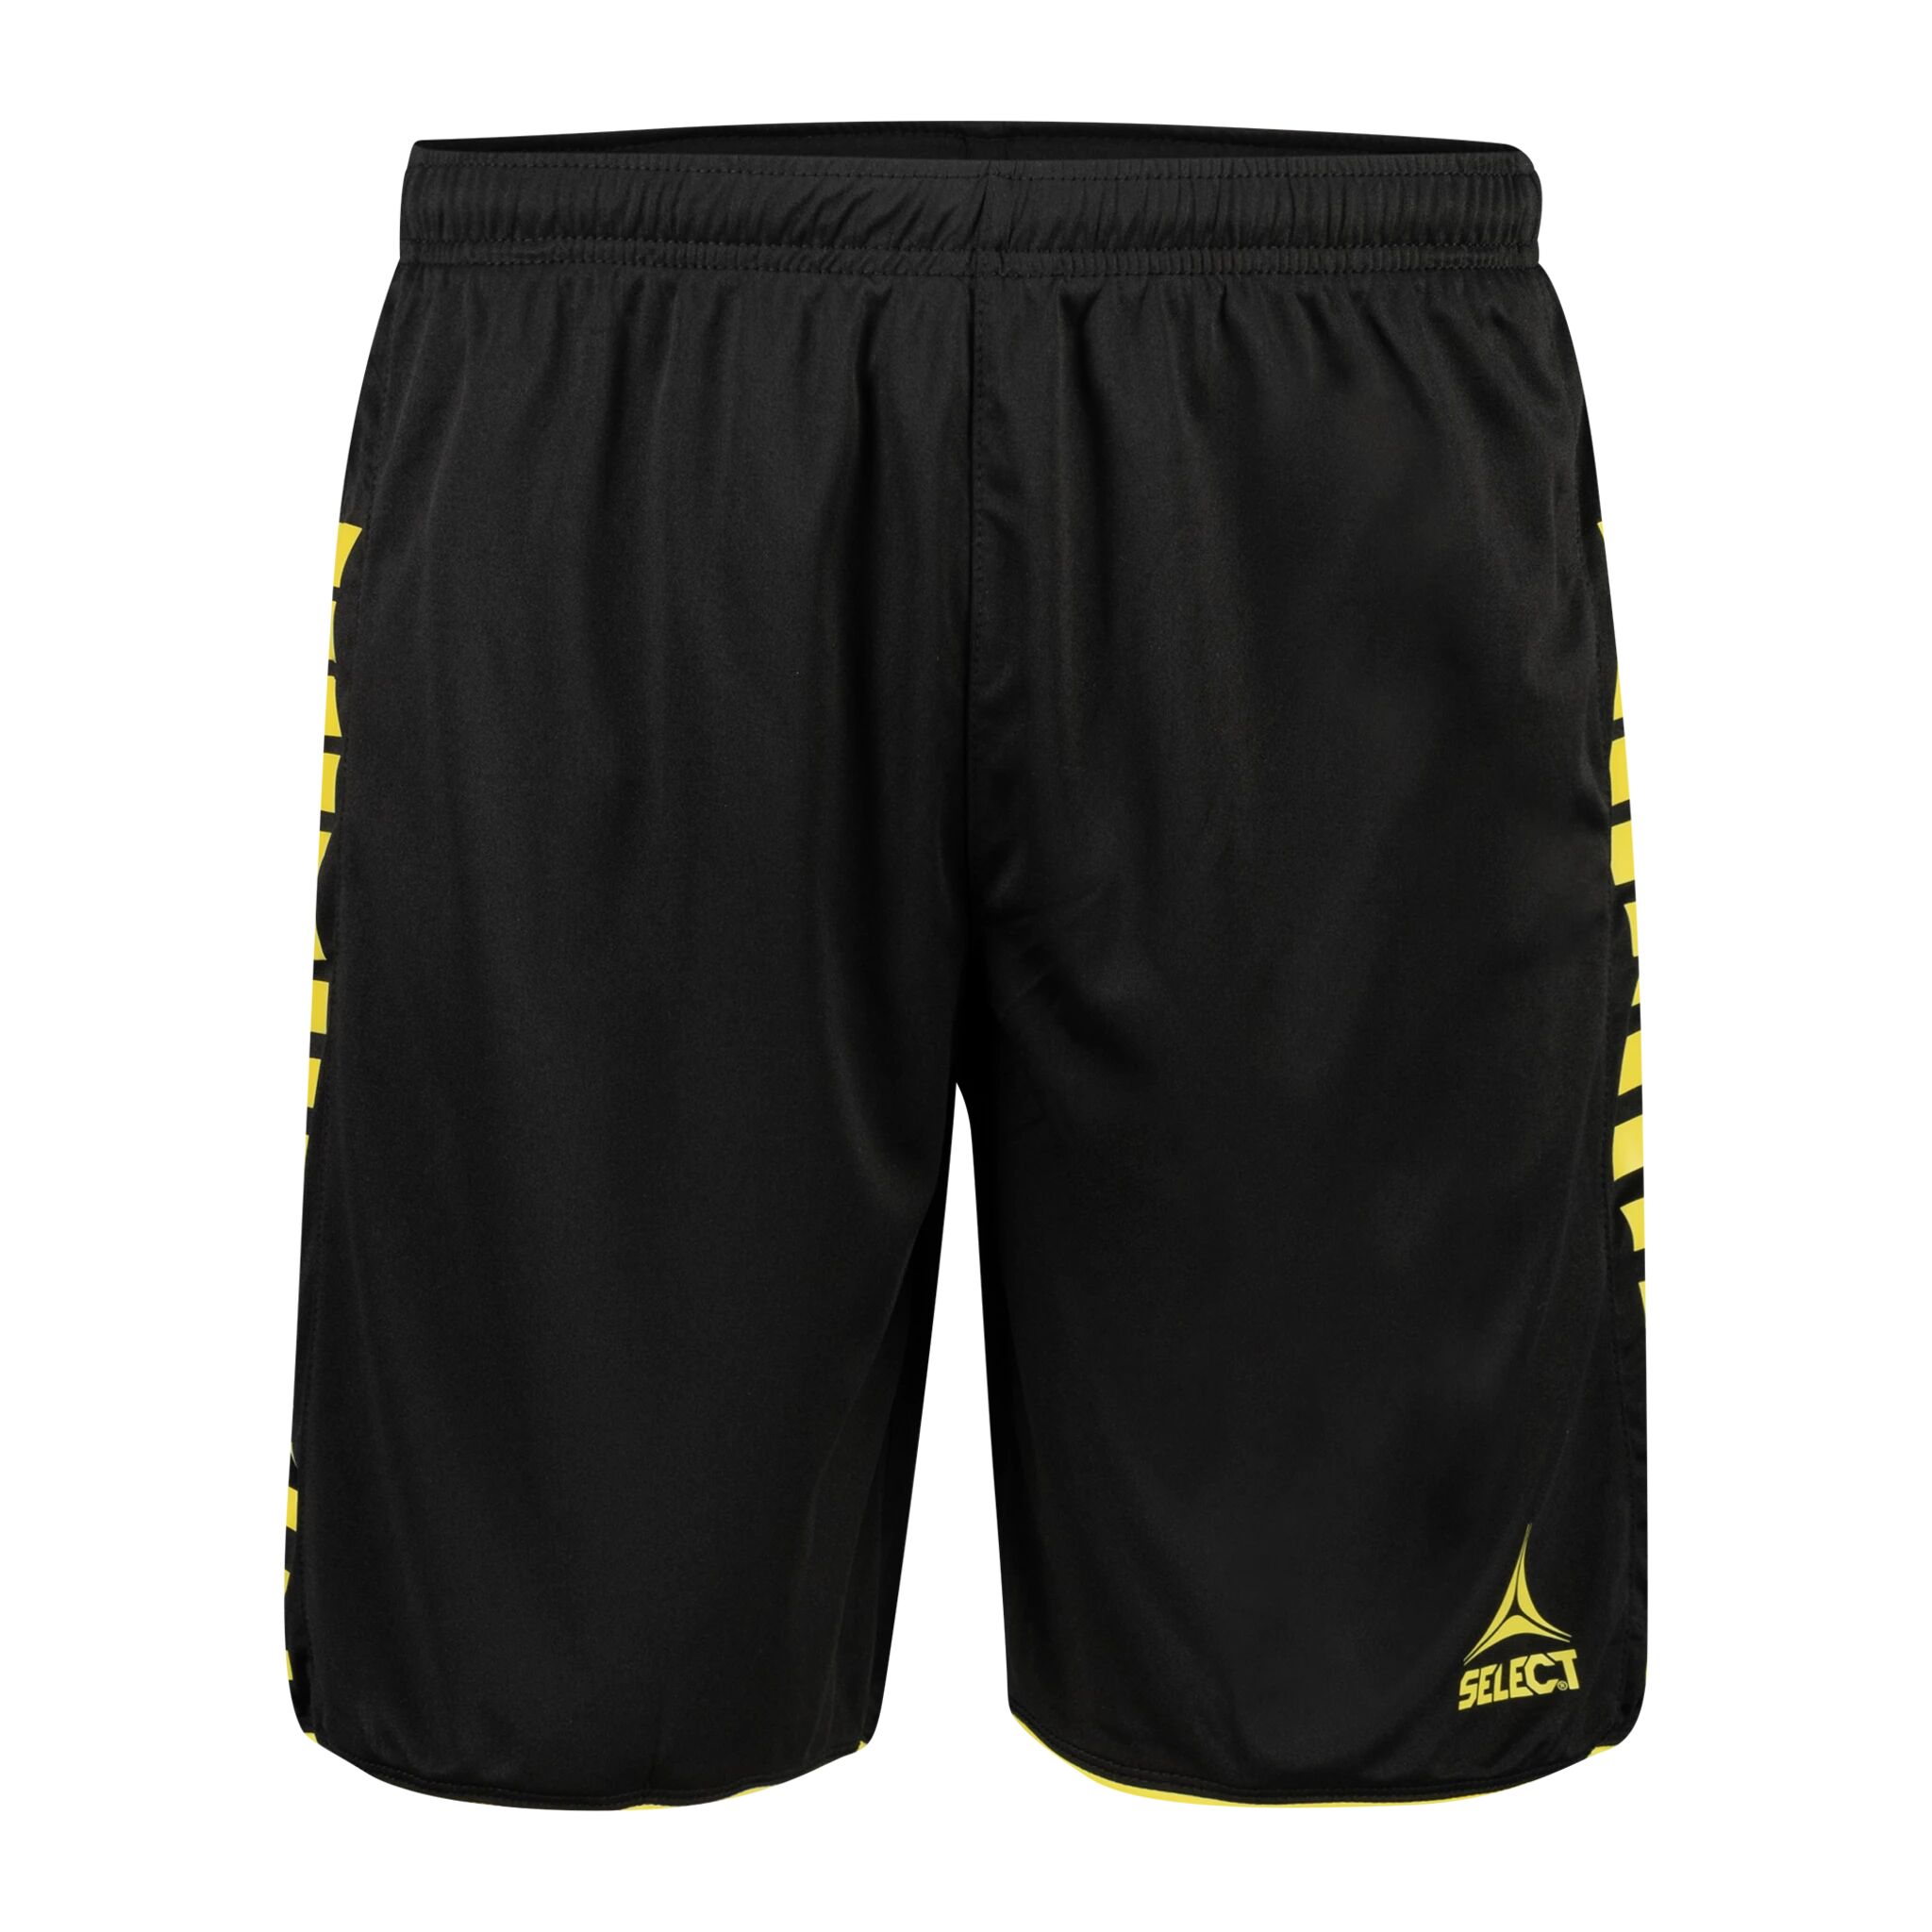 Select Player shorts Argentina, shorts Junior/Senior 116 Black/Yellow